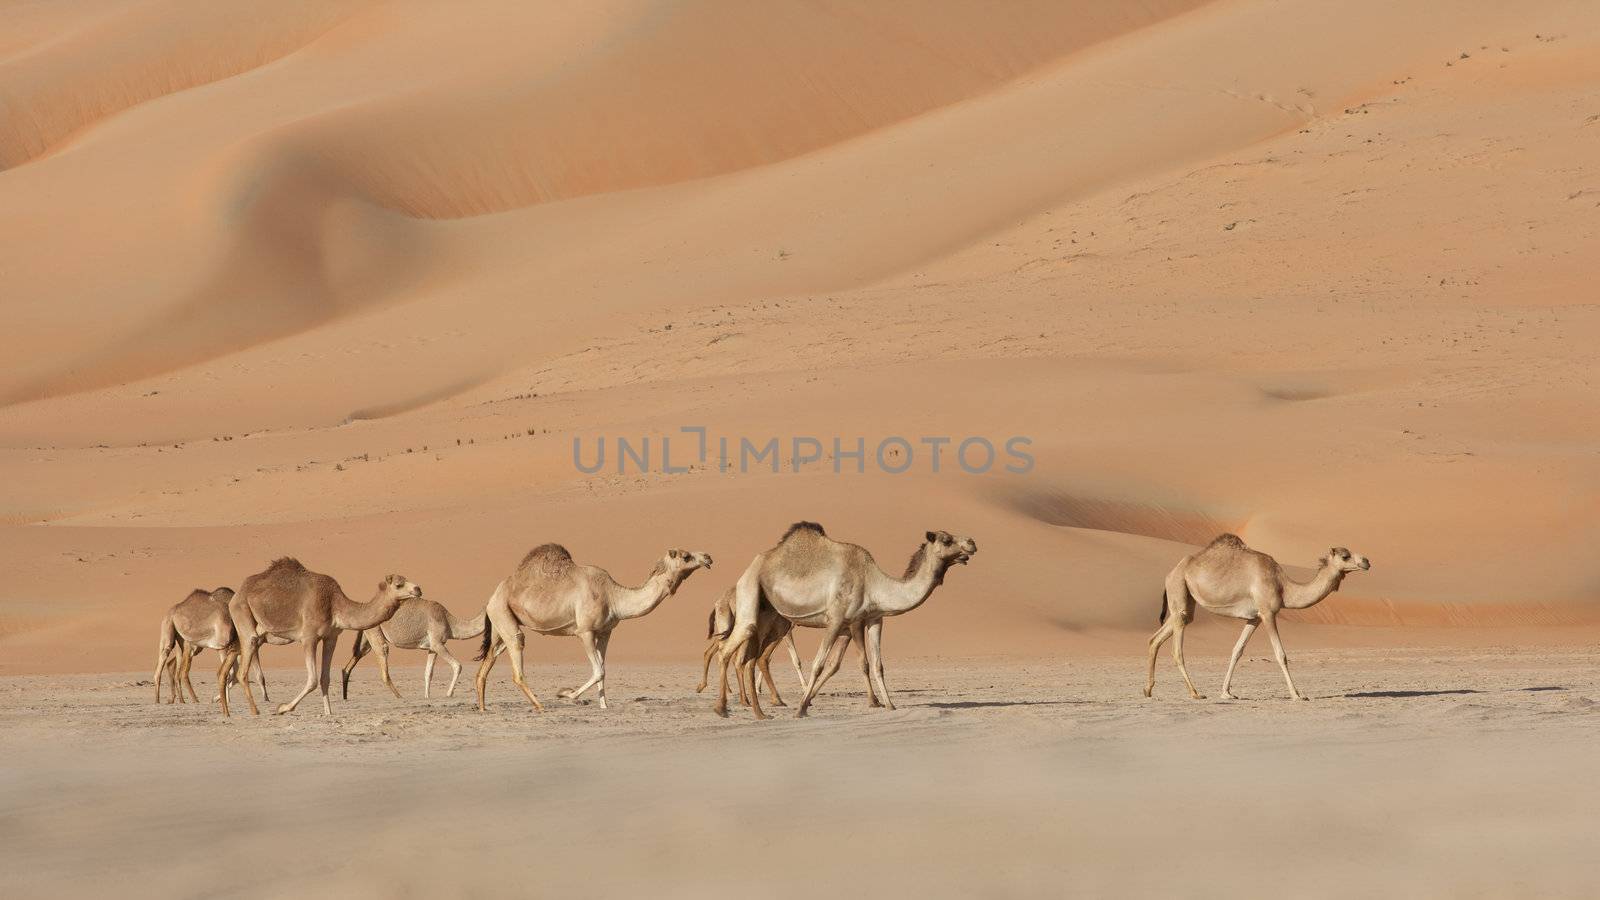 Empty Quarter Camels by zambezi